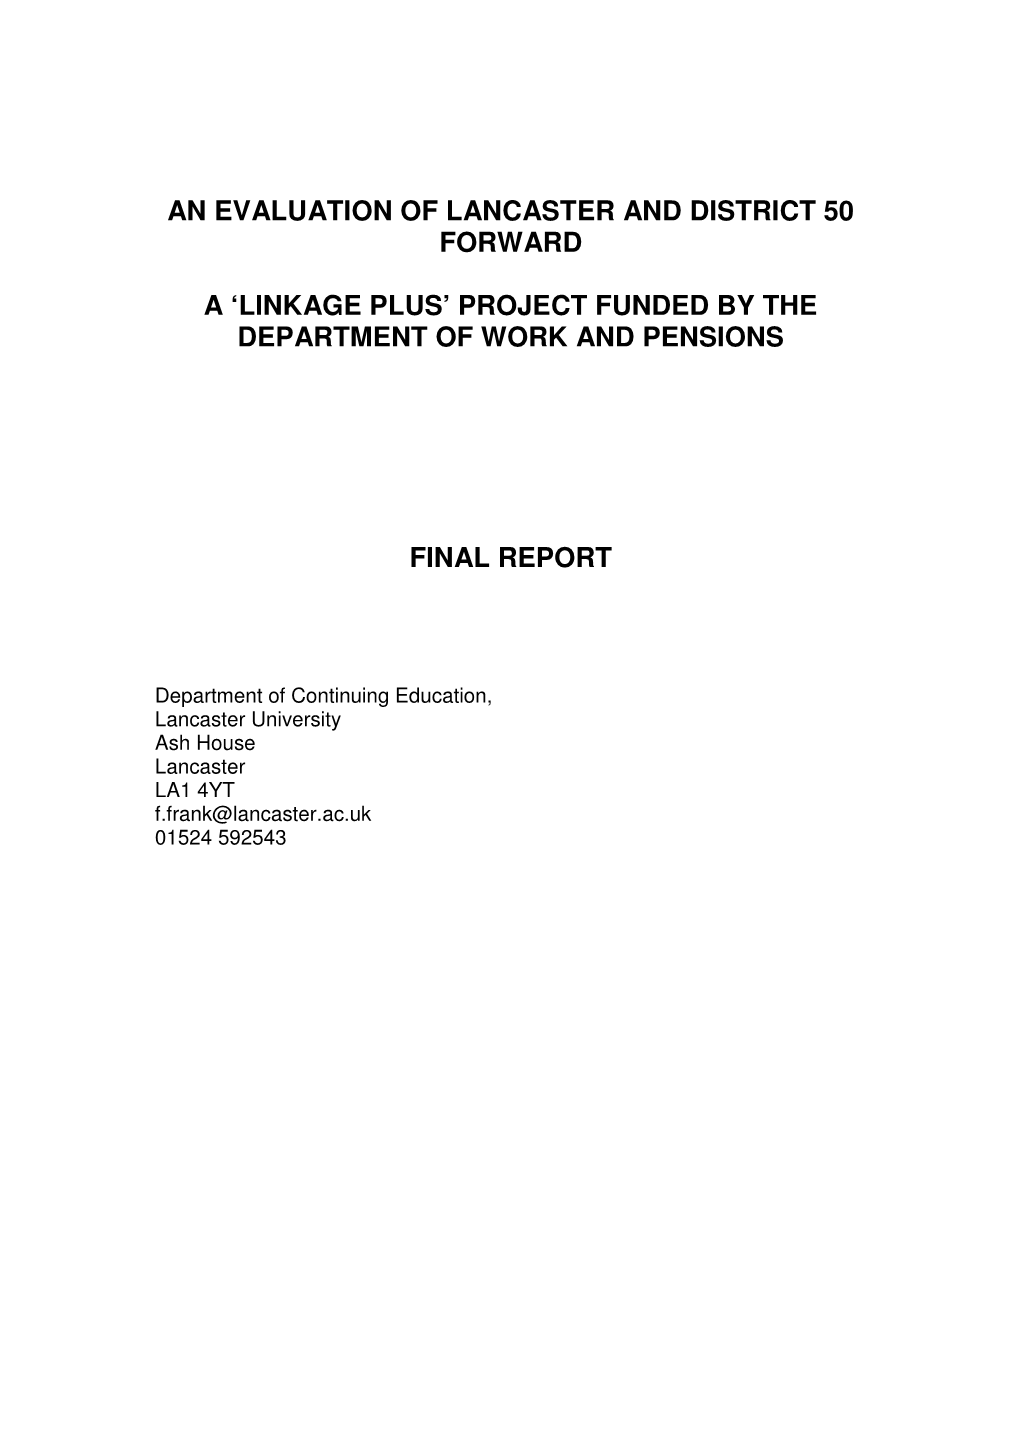 Lancashire Evaluation Report